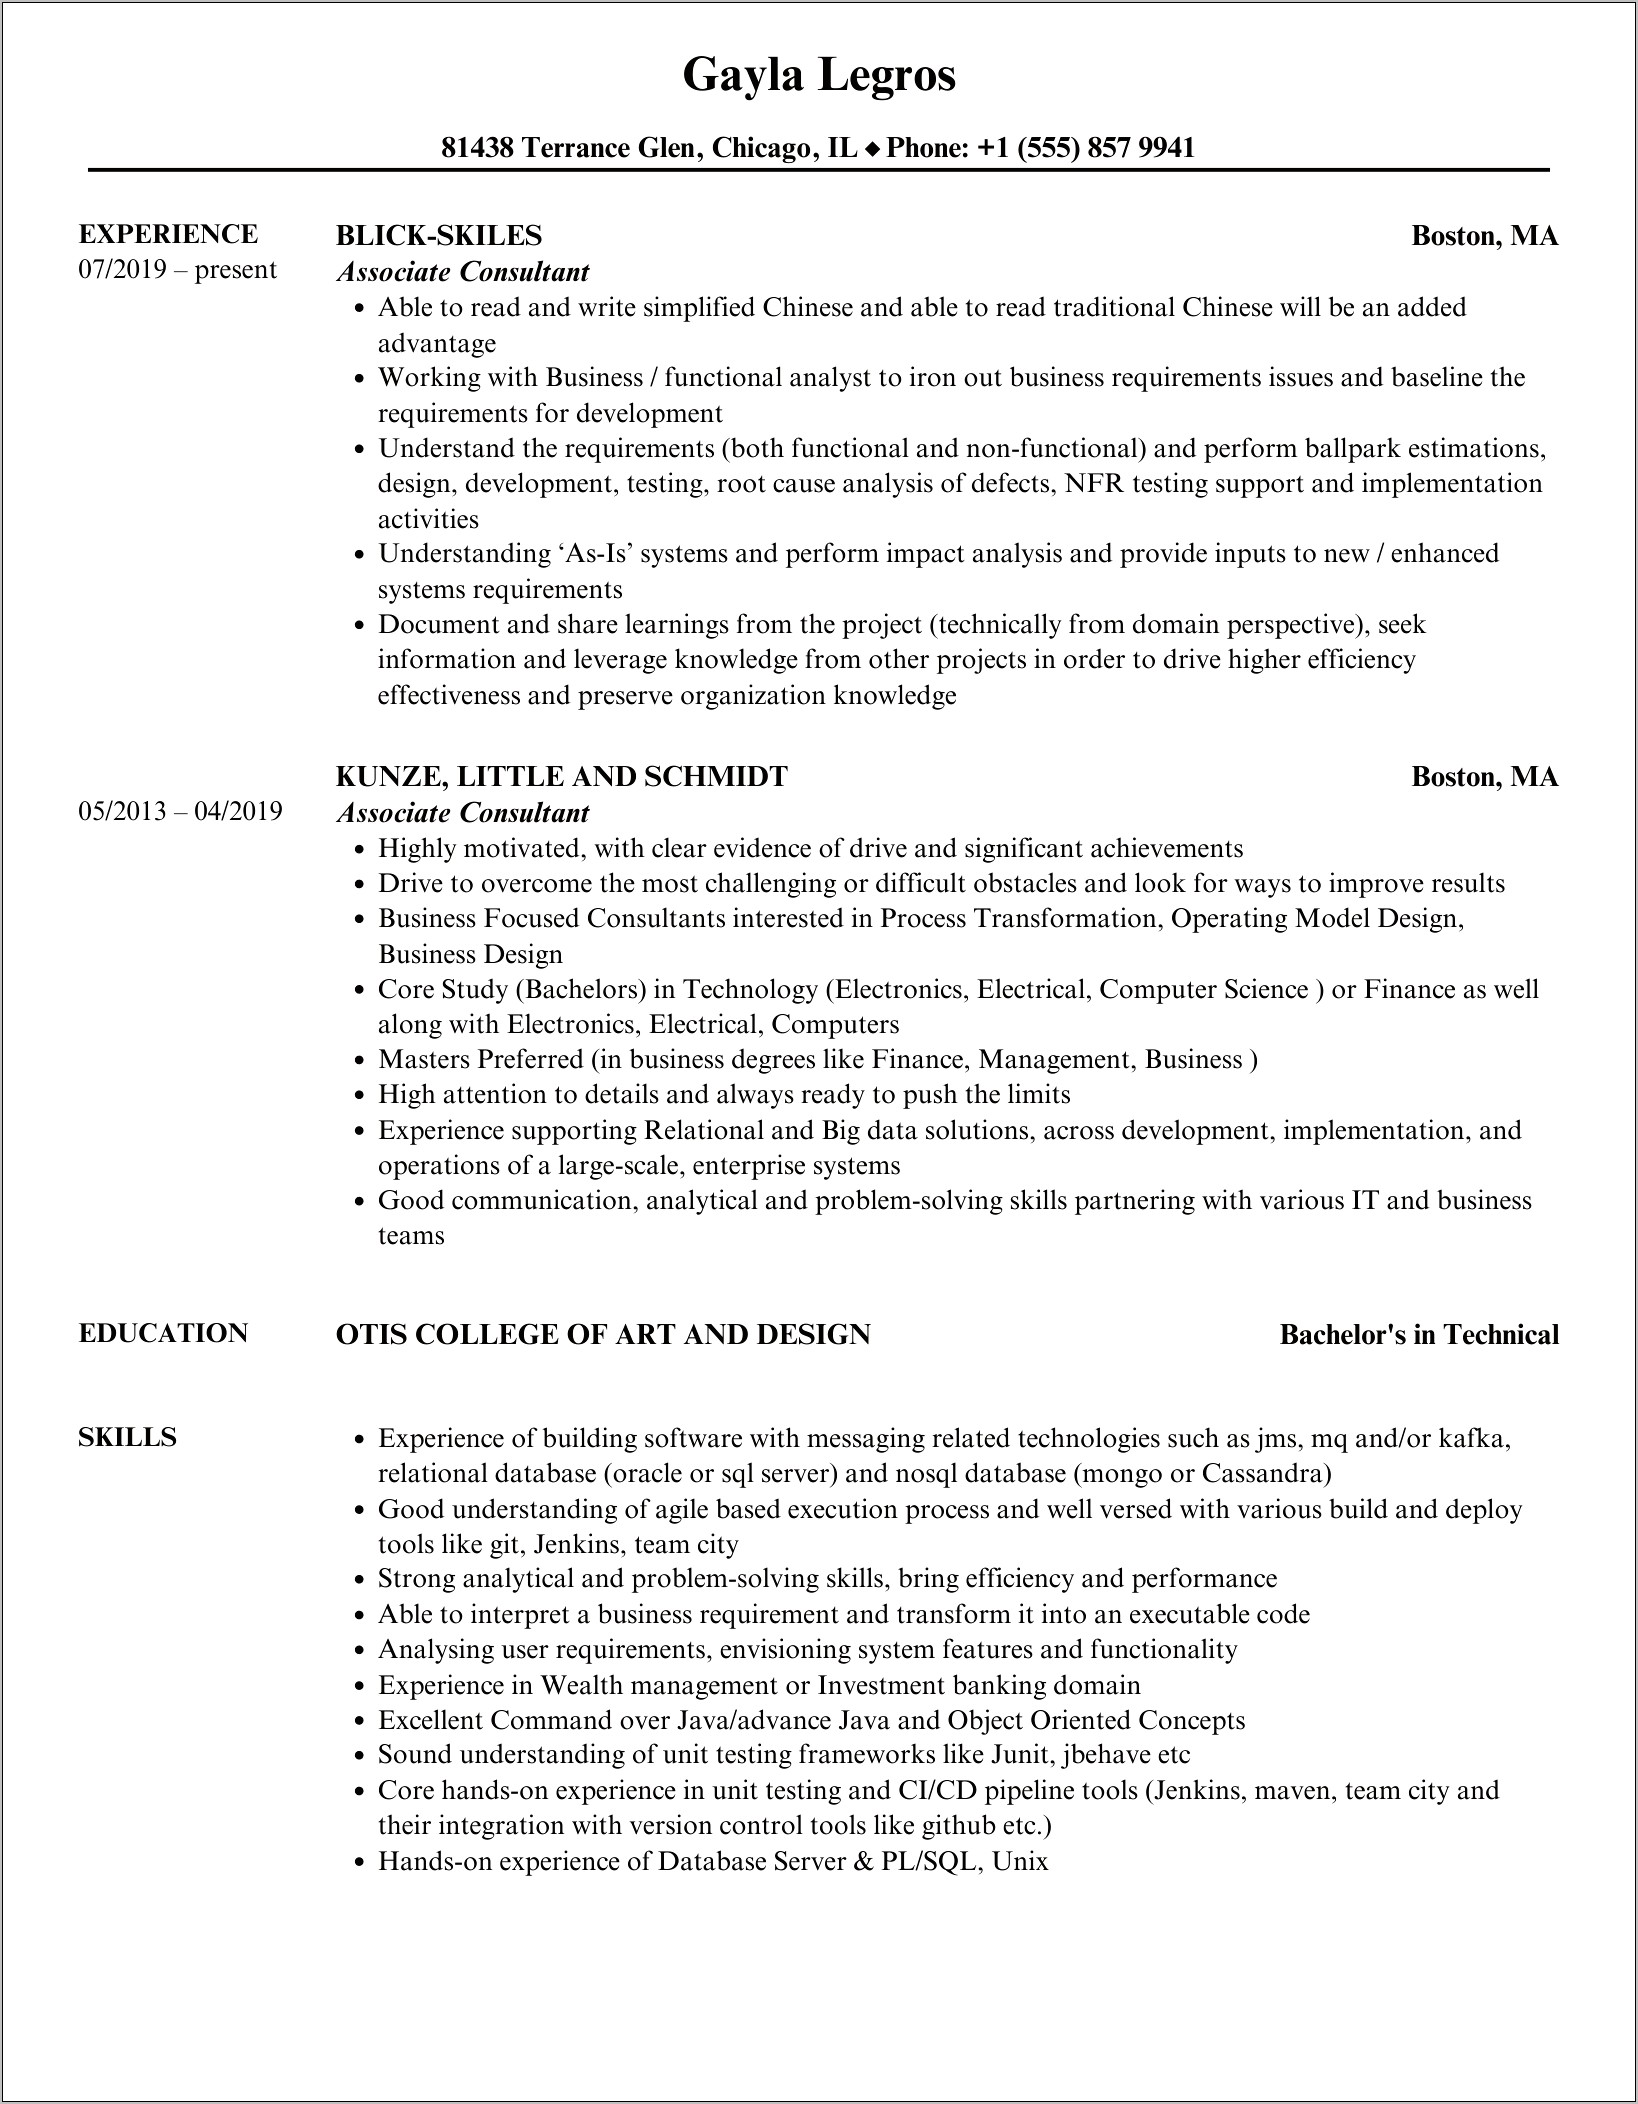 Sample Resume For Zs Associates